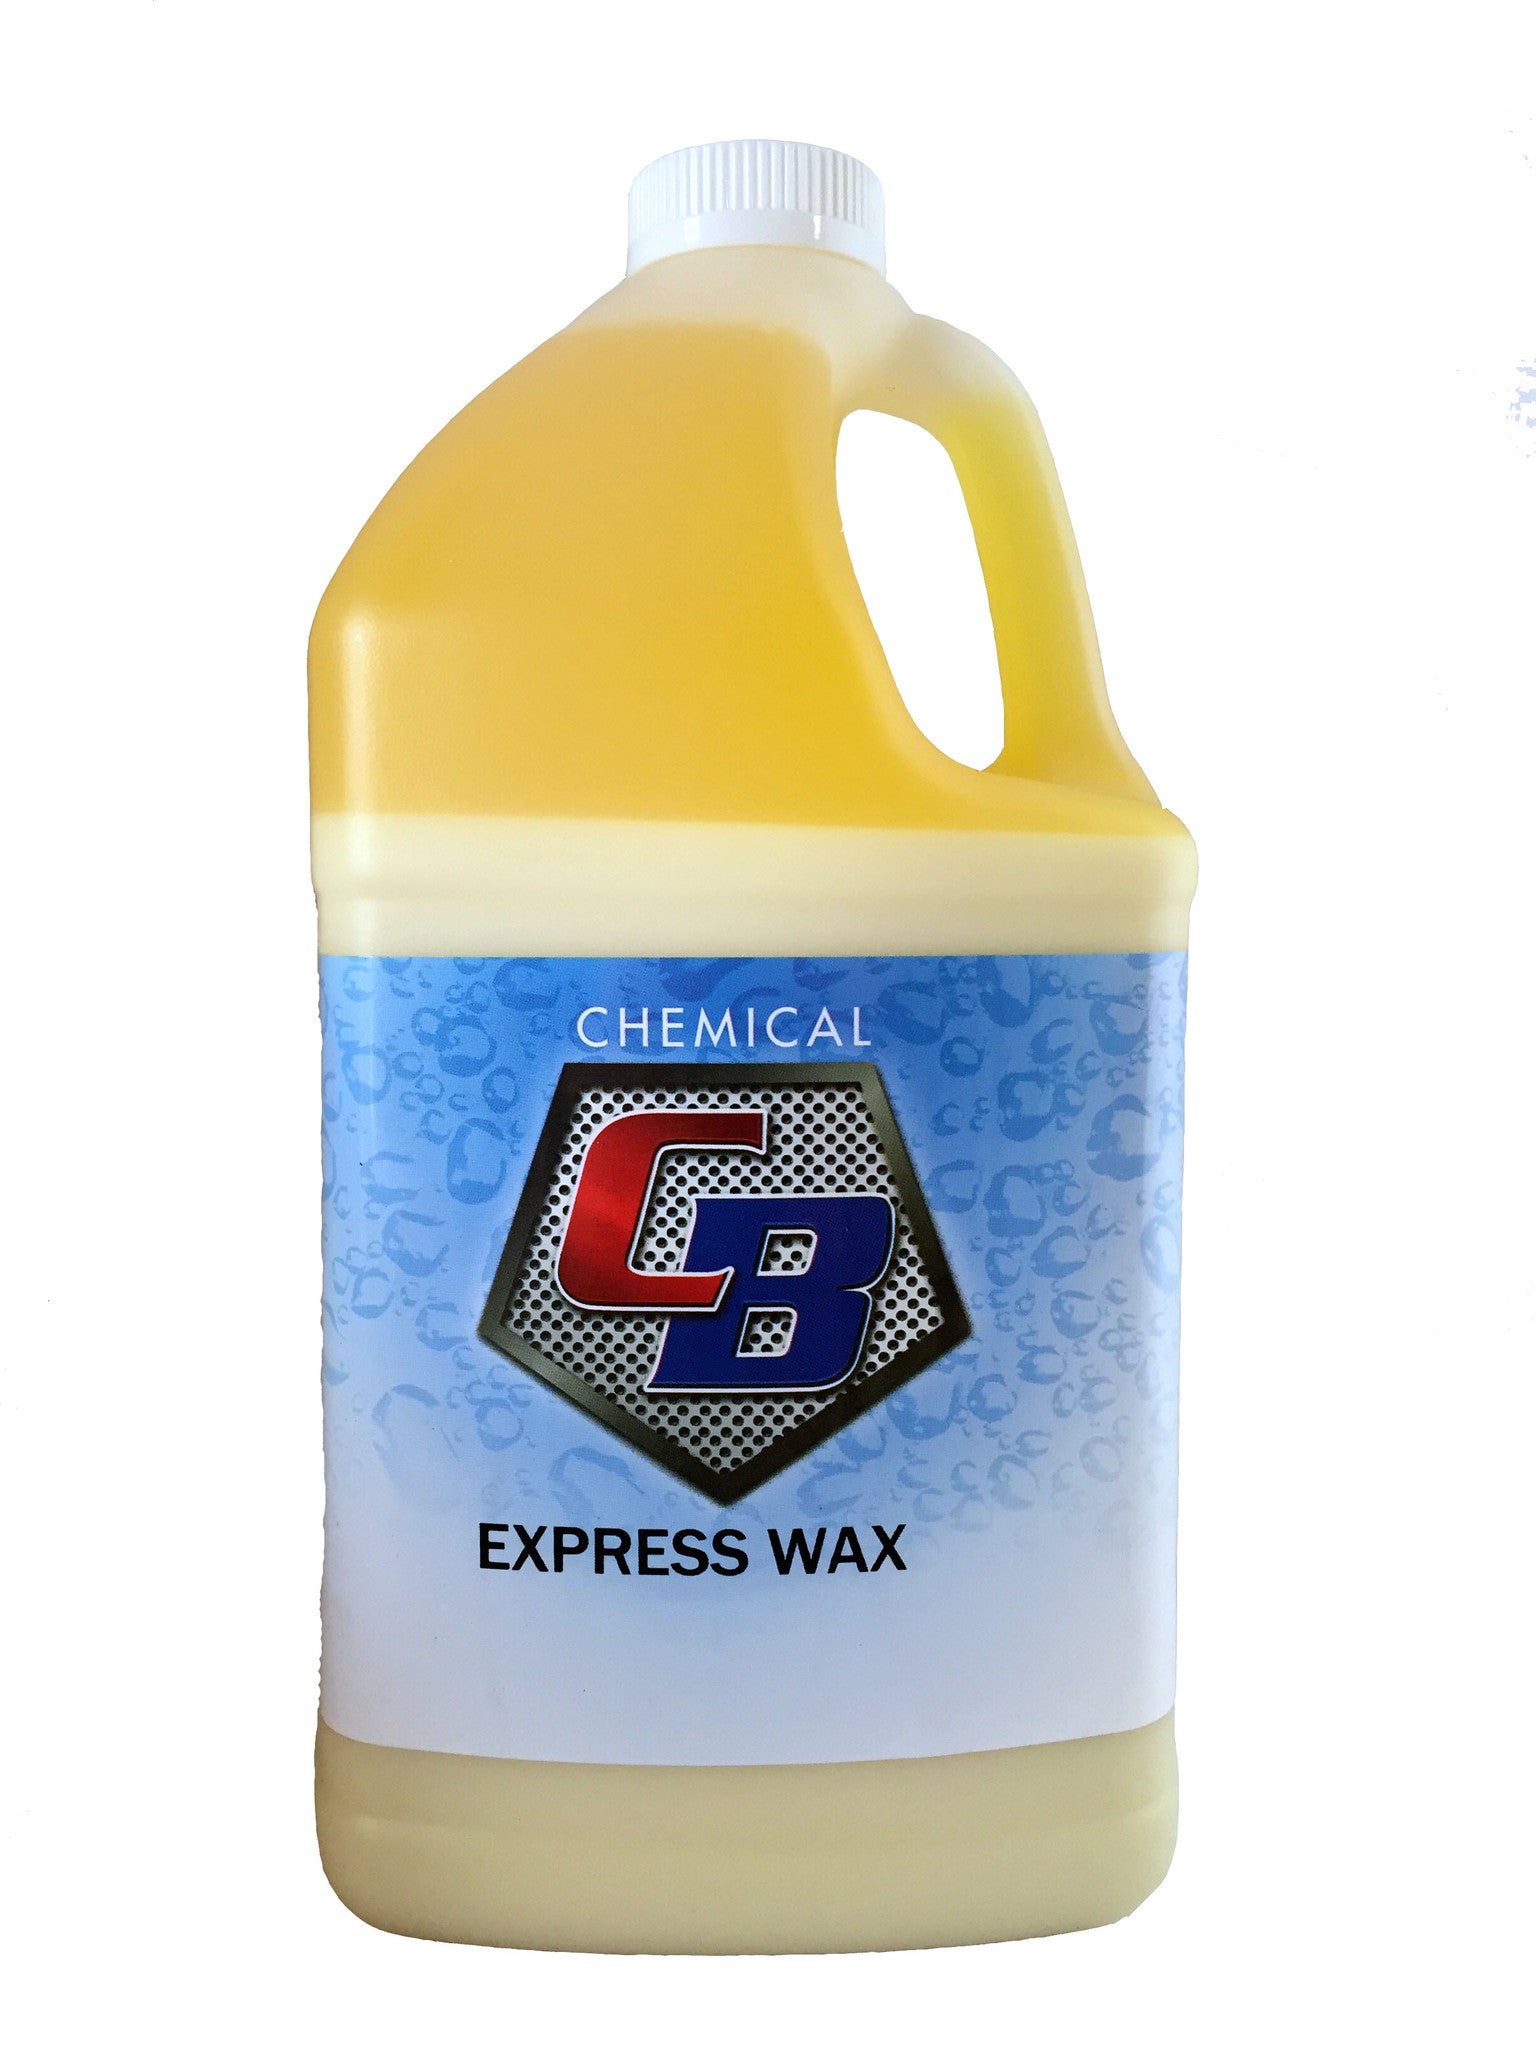 Express Wax - C & B Chemical, Inc